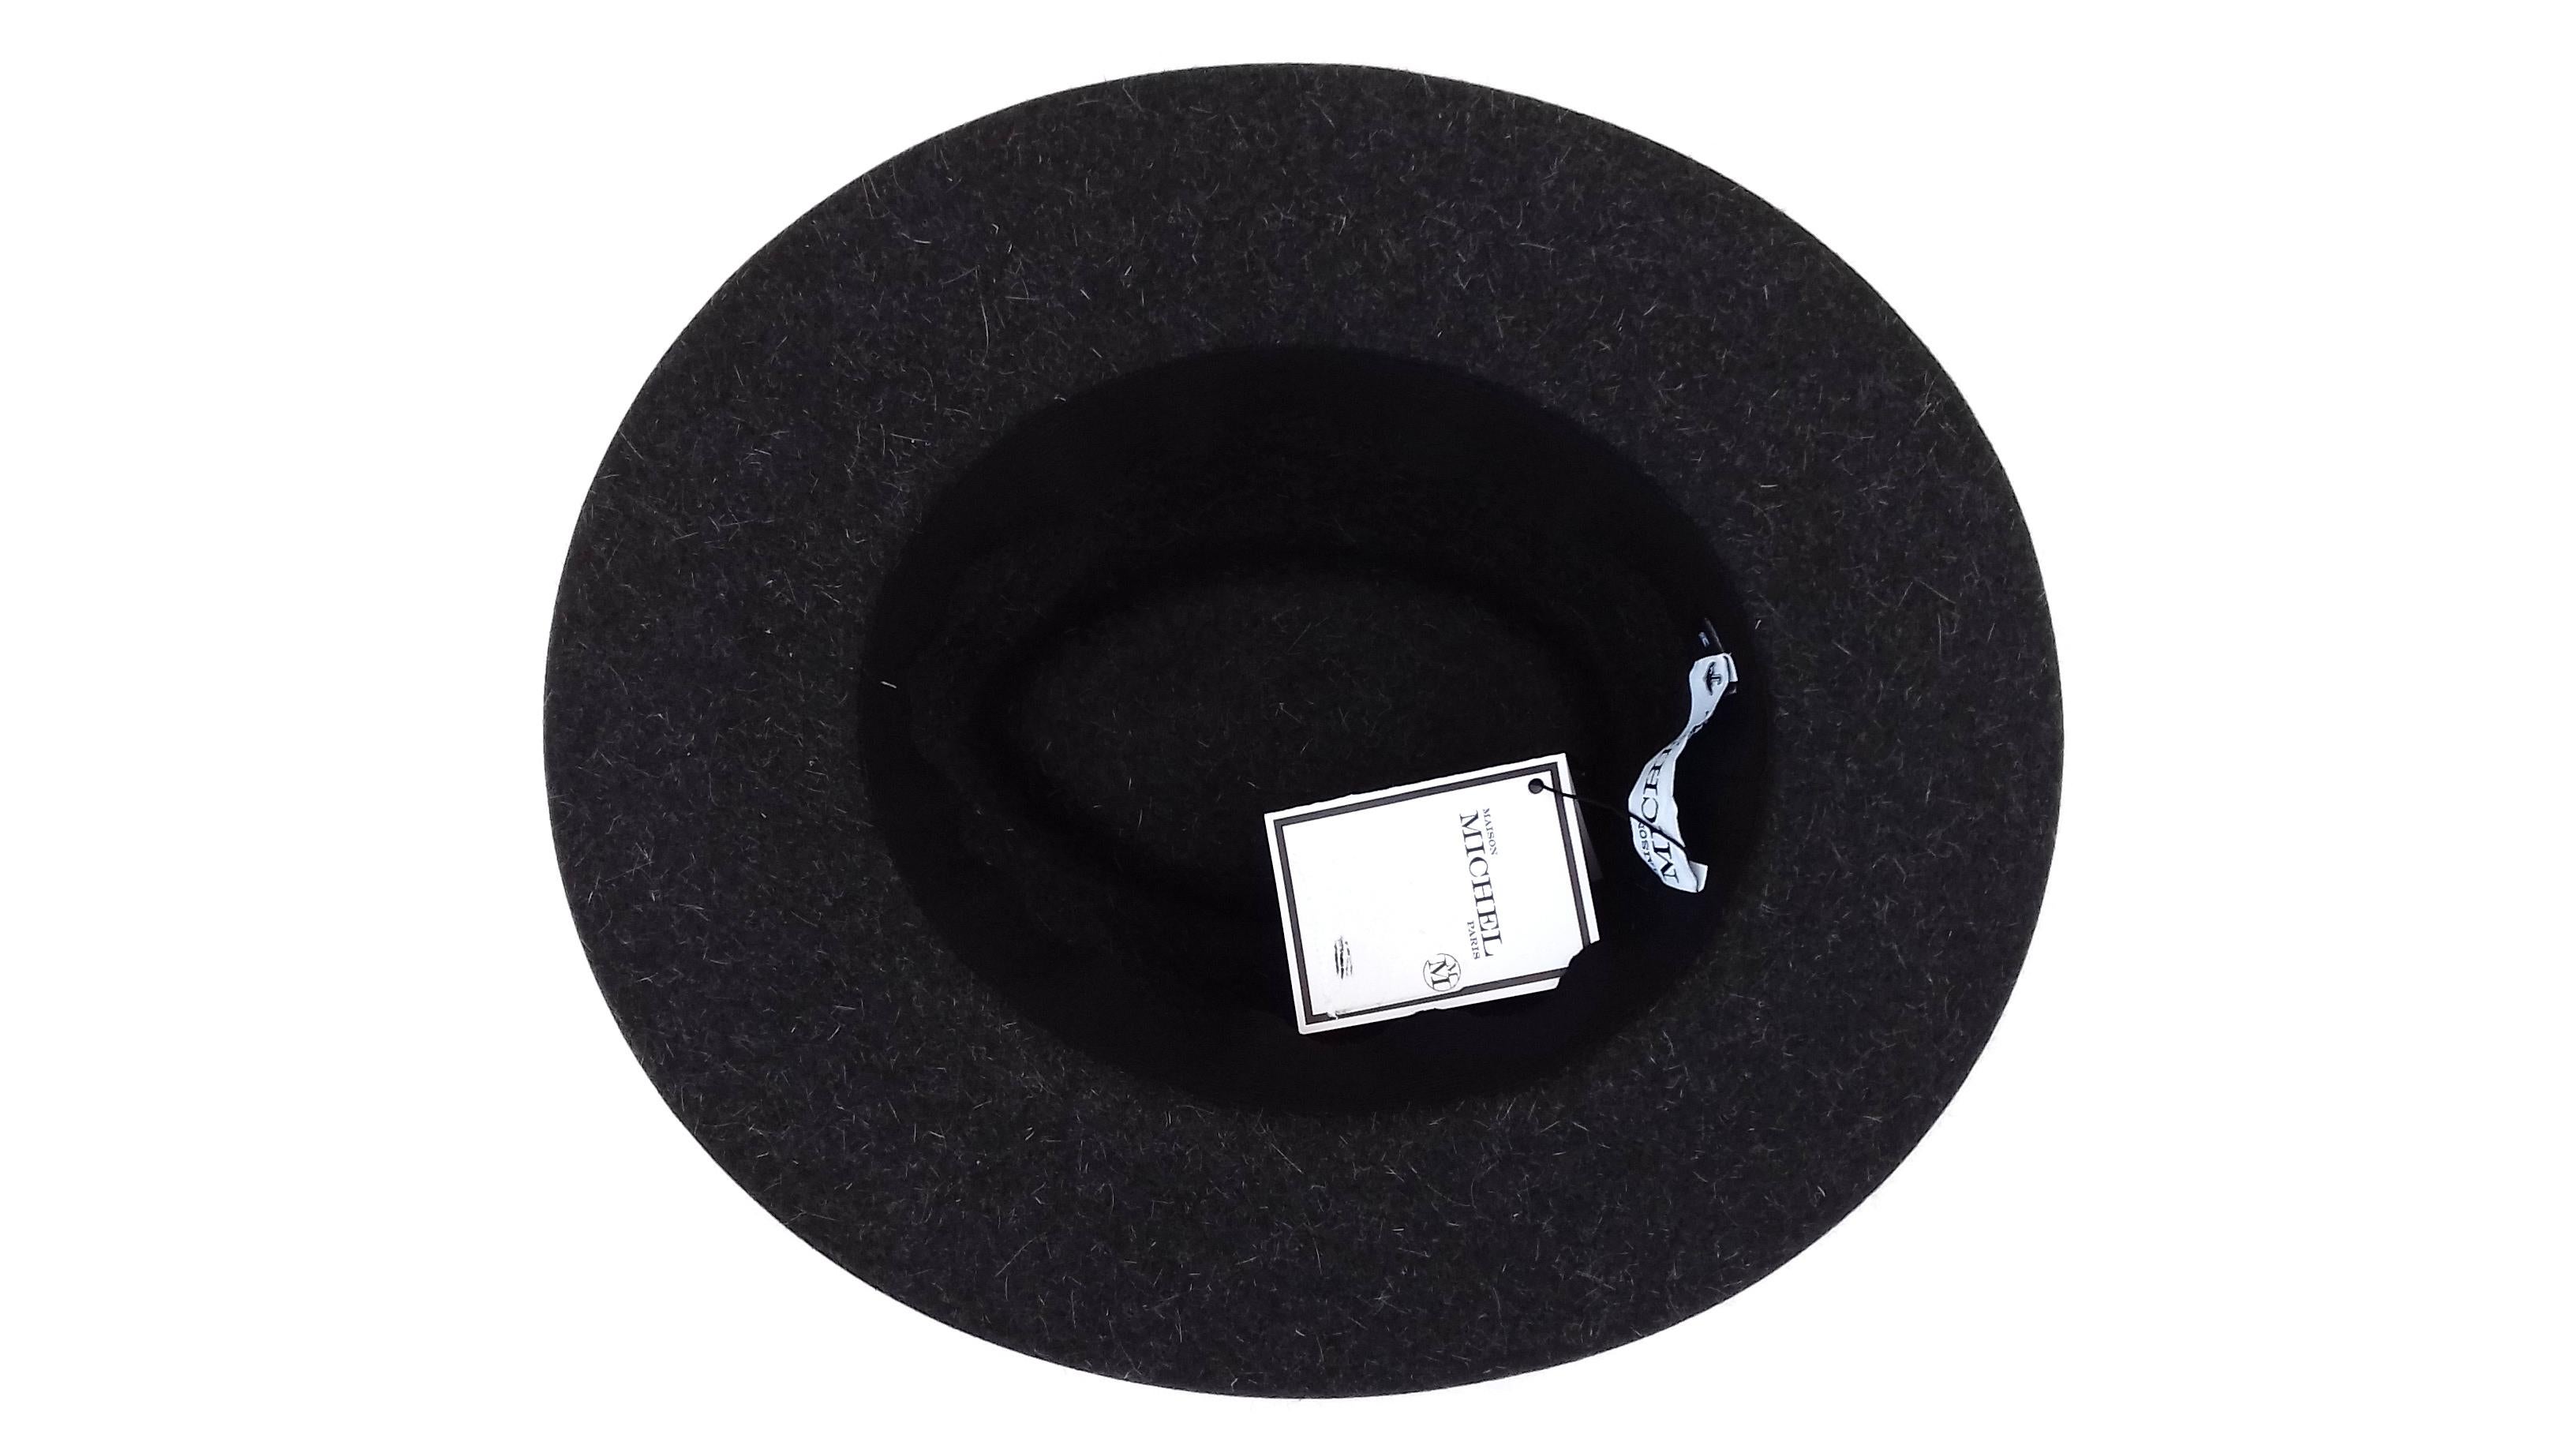 MAISON MICHEL Paris Andre Fedora Felt Hat in Charcoal Grey Size M For Sale 1